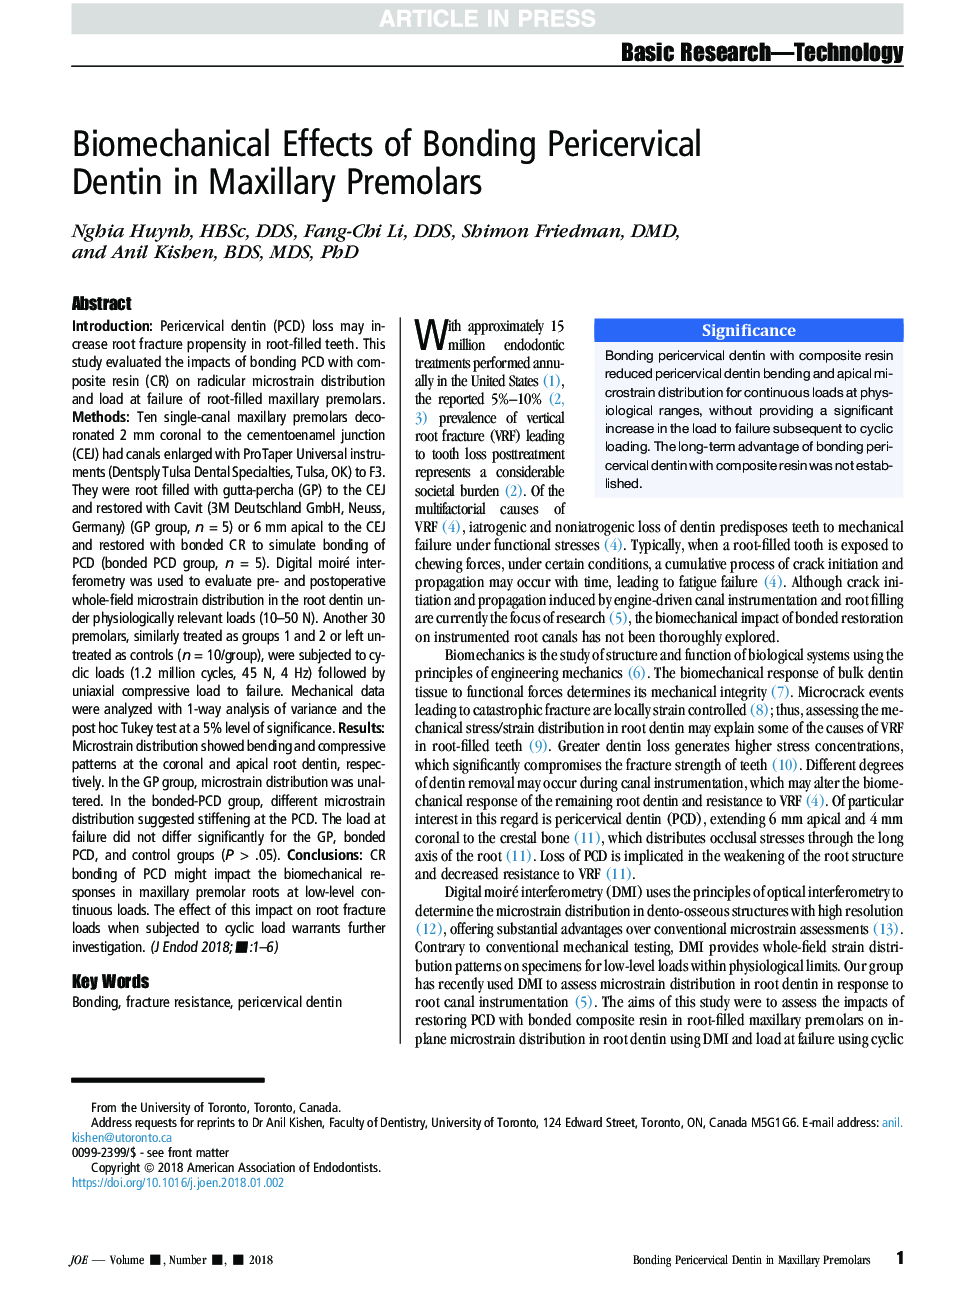 Biomechanical Effects of Bonding Pericervical Dentin in Maxillary Premolars